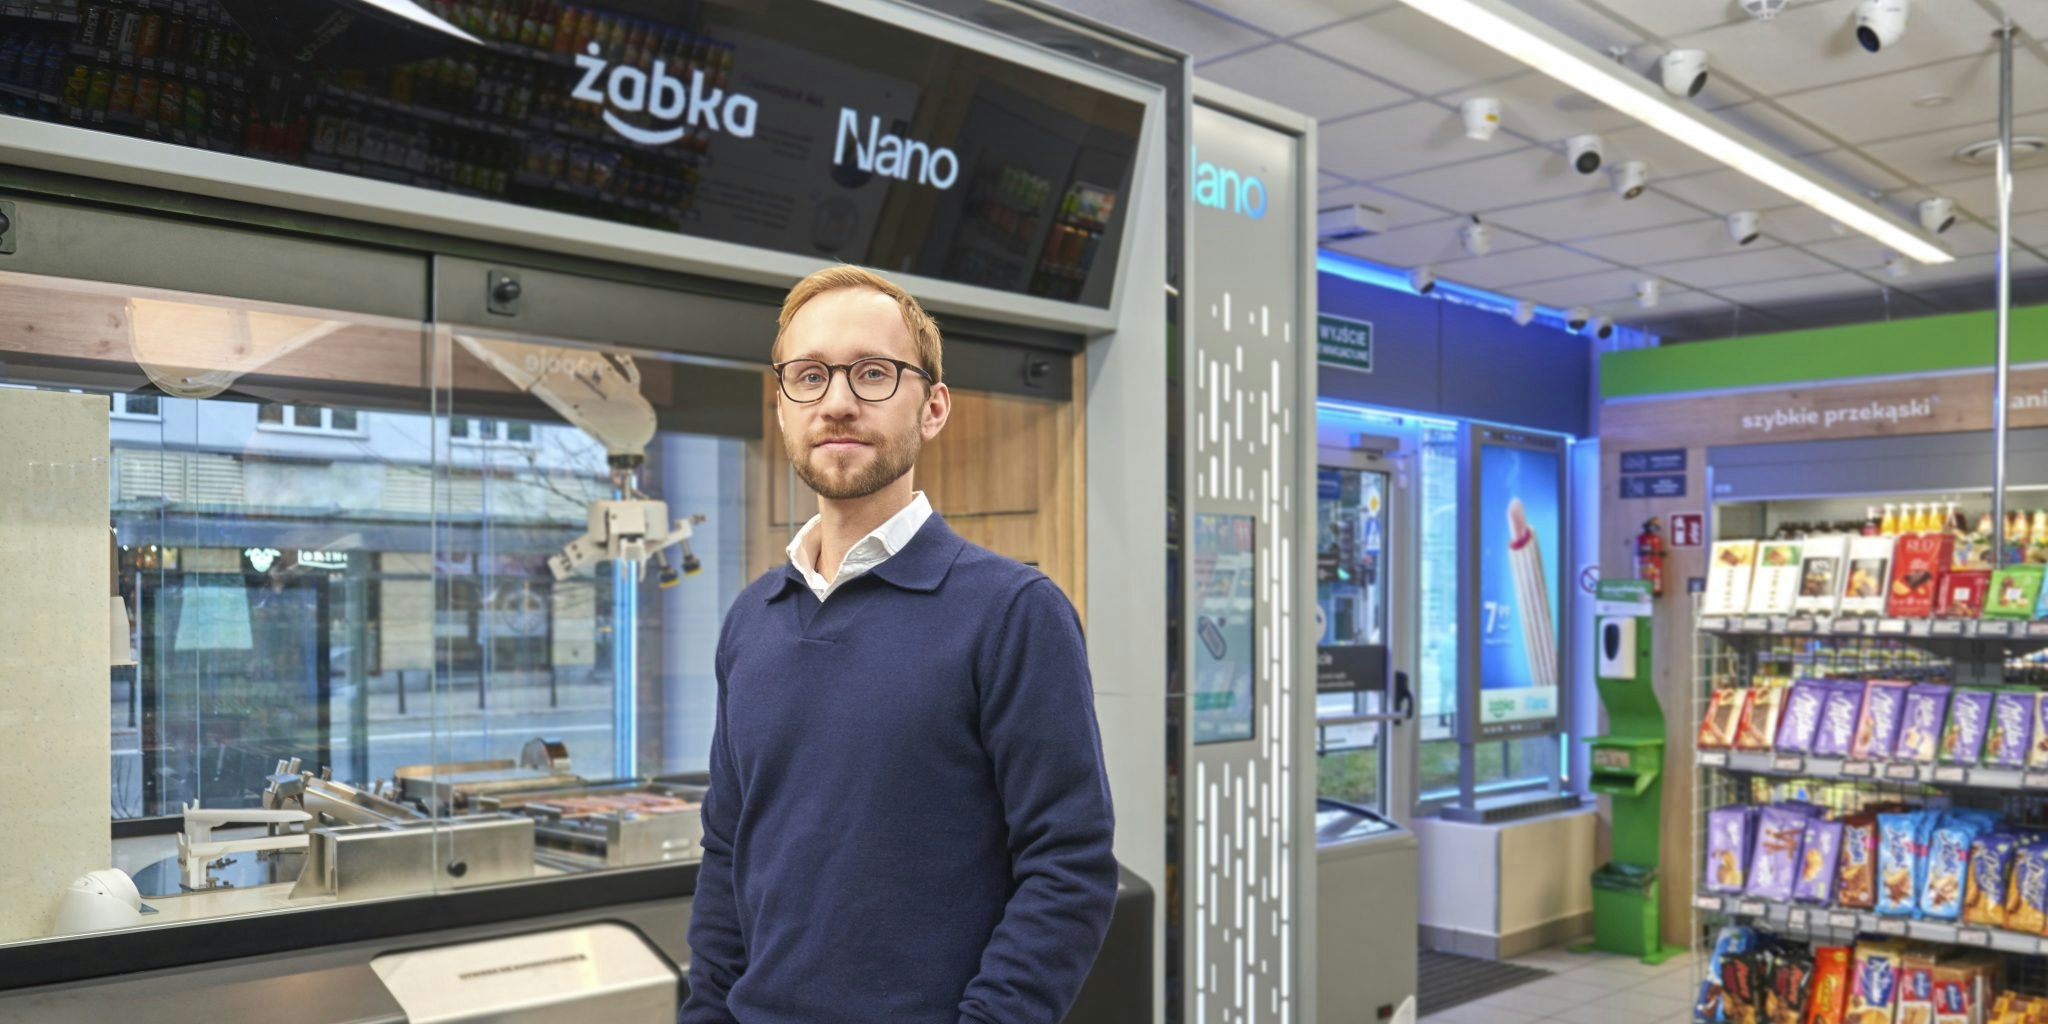 Karol Gajewicz, head of venture studio at Żabka Future